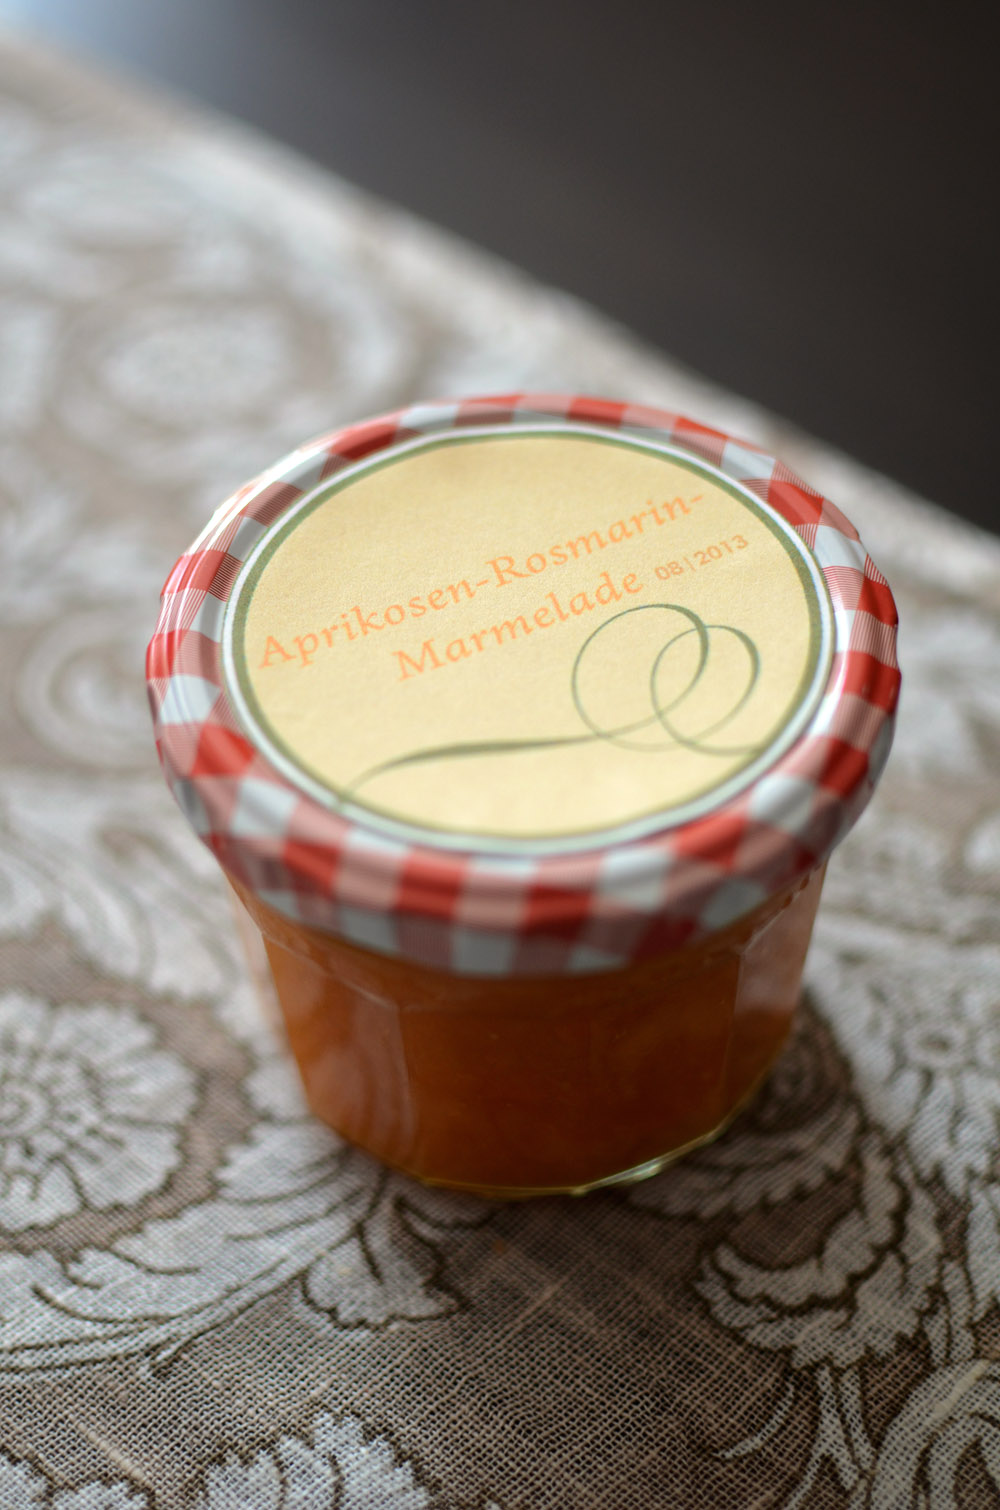 Blogschokolade &amp; Butterpost: Aprikosen-Rosmarin-Marmelade